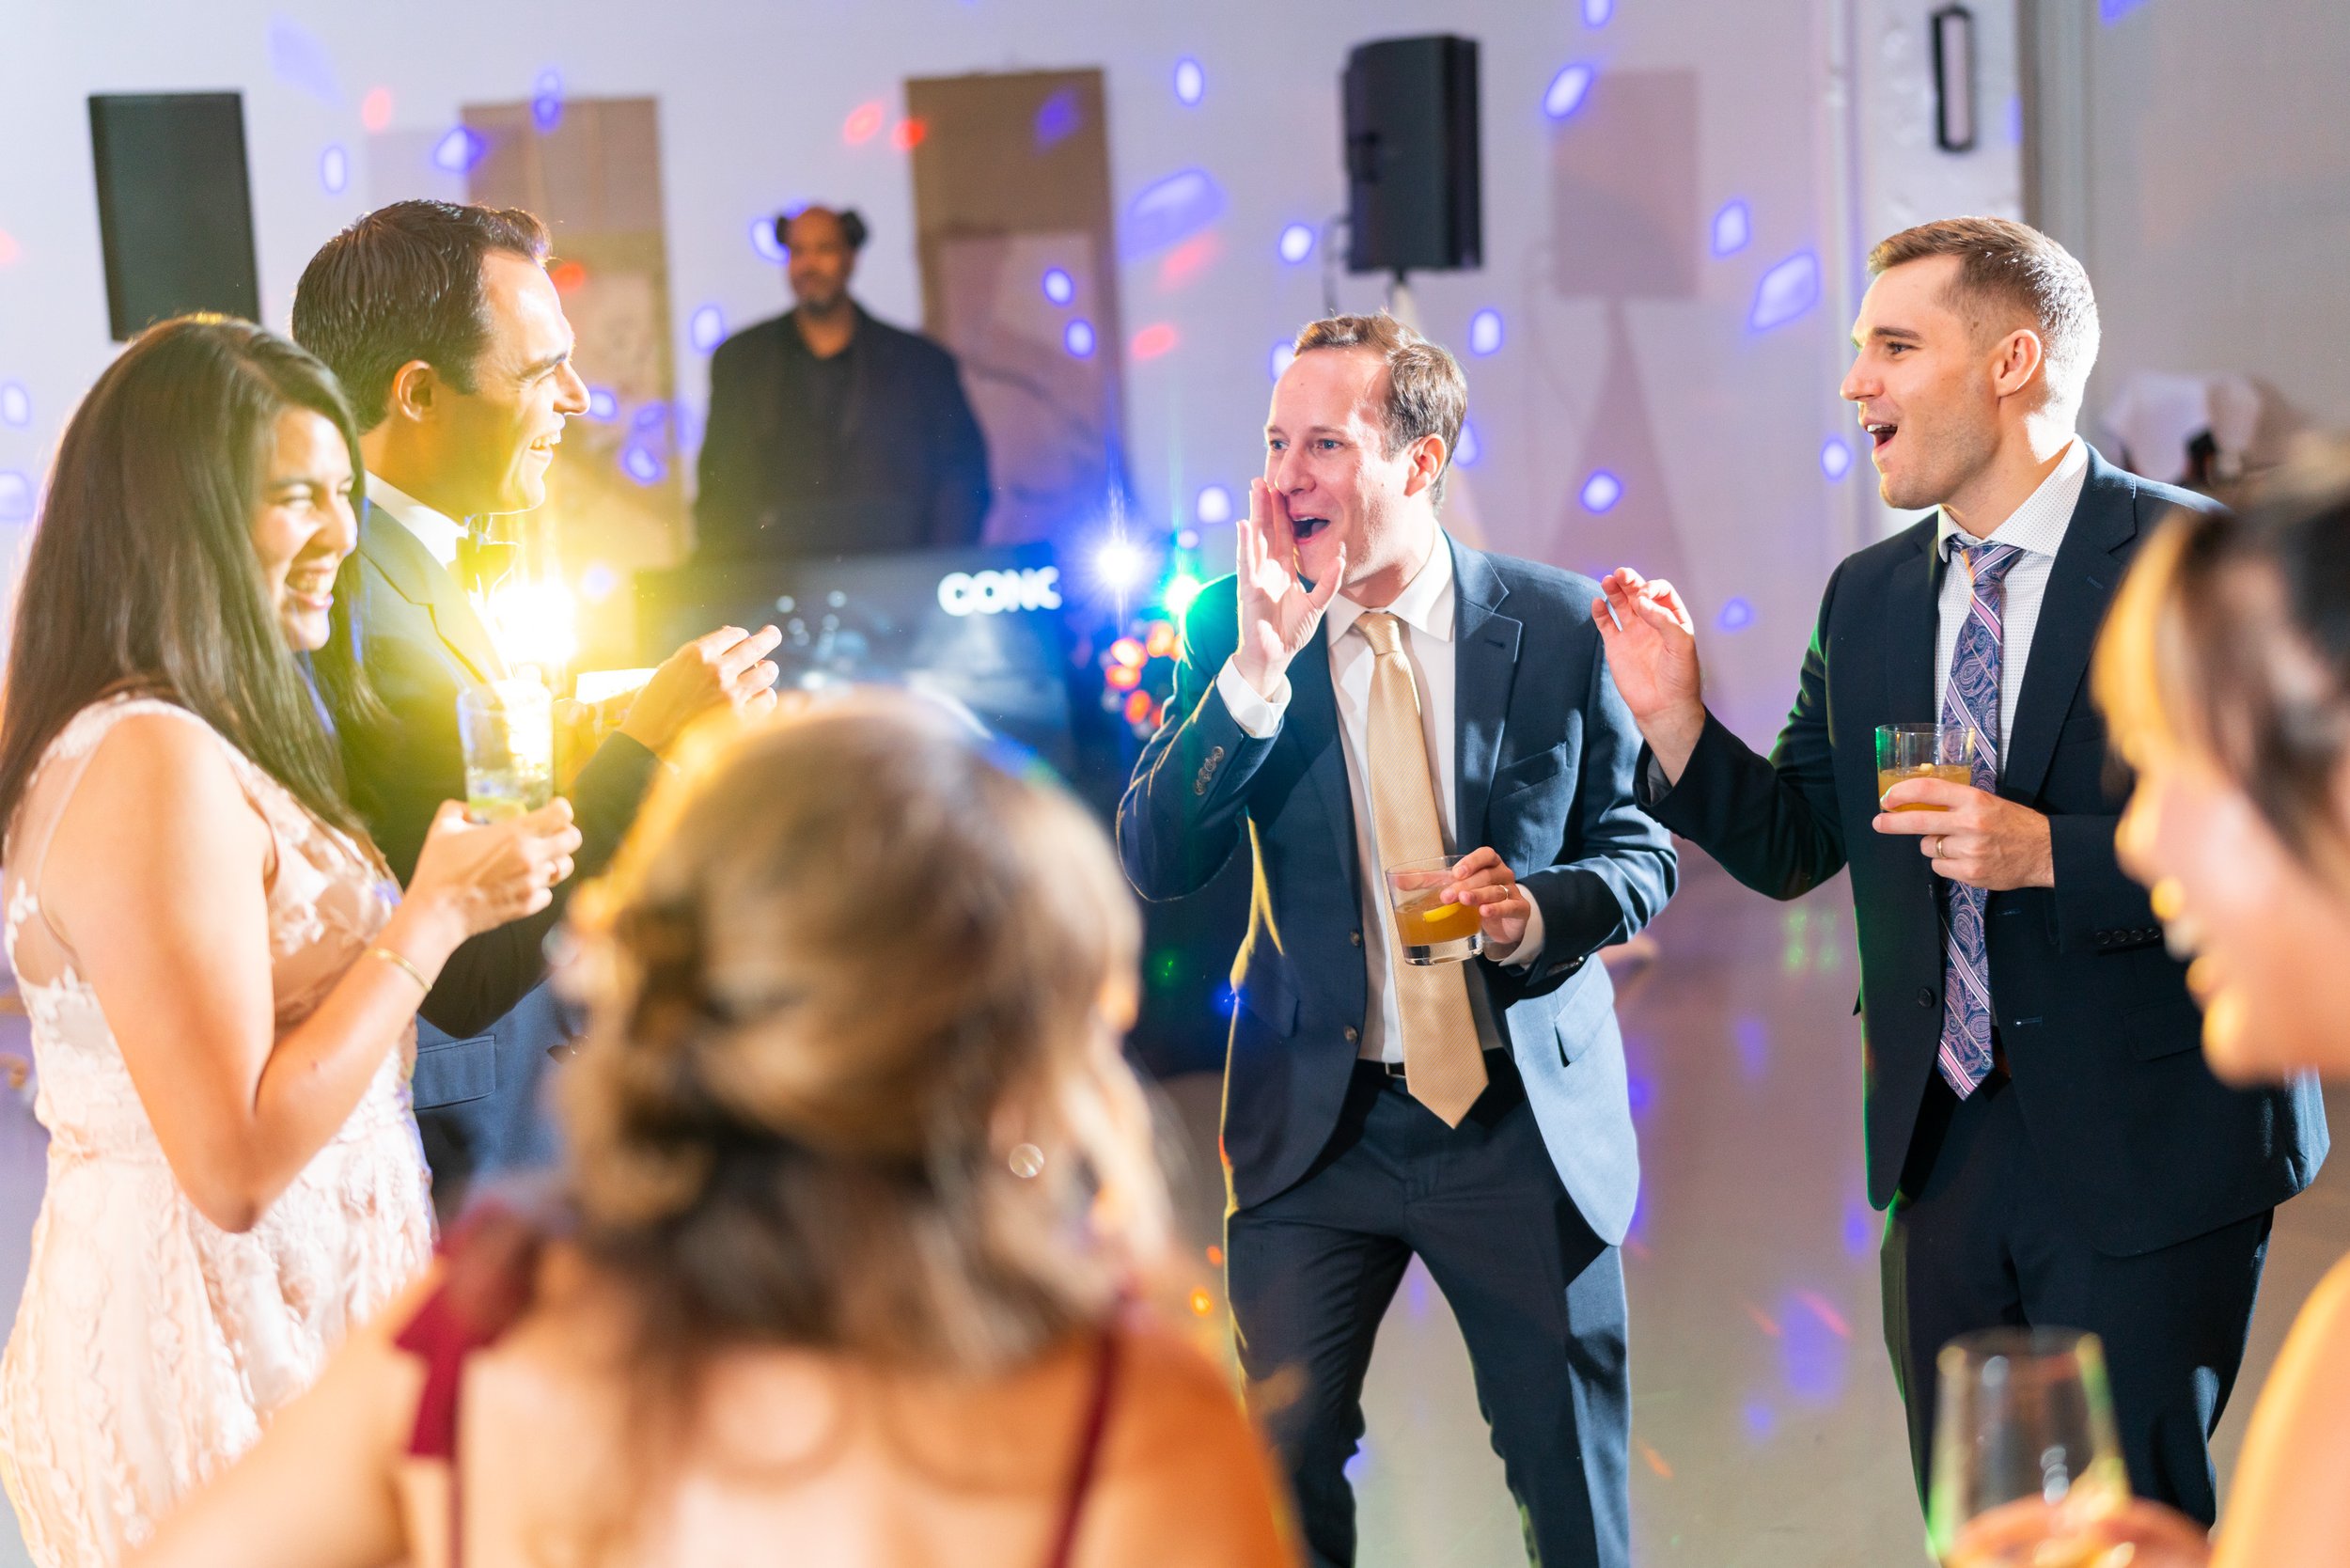 Fun lighting and color at wedding reception dance floor